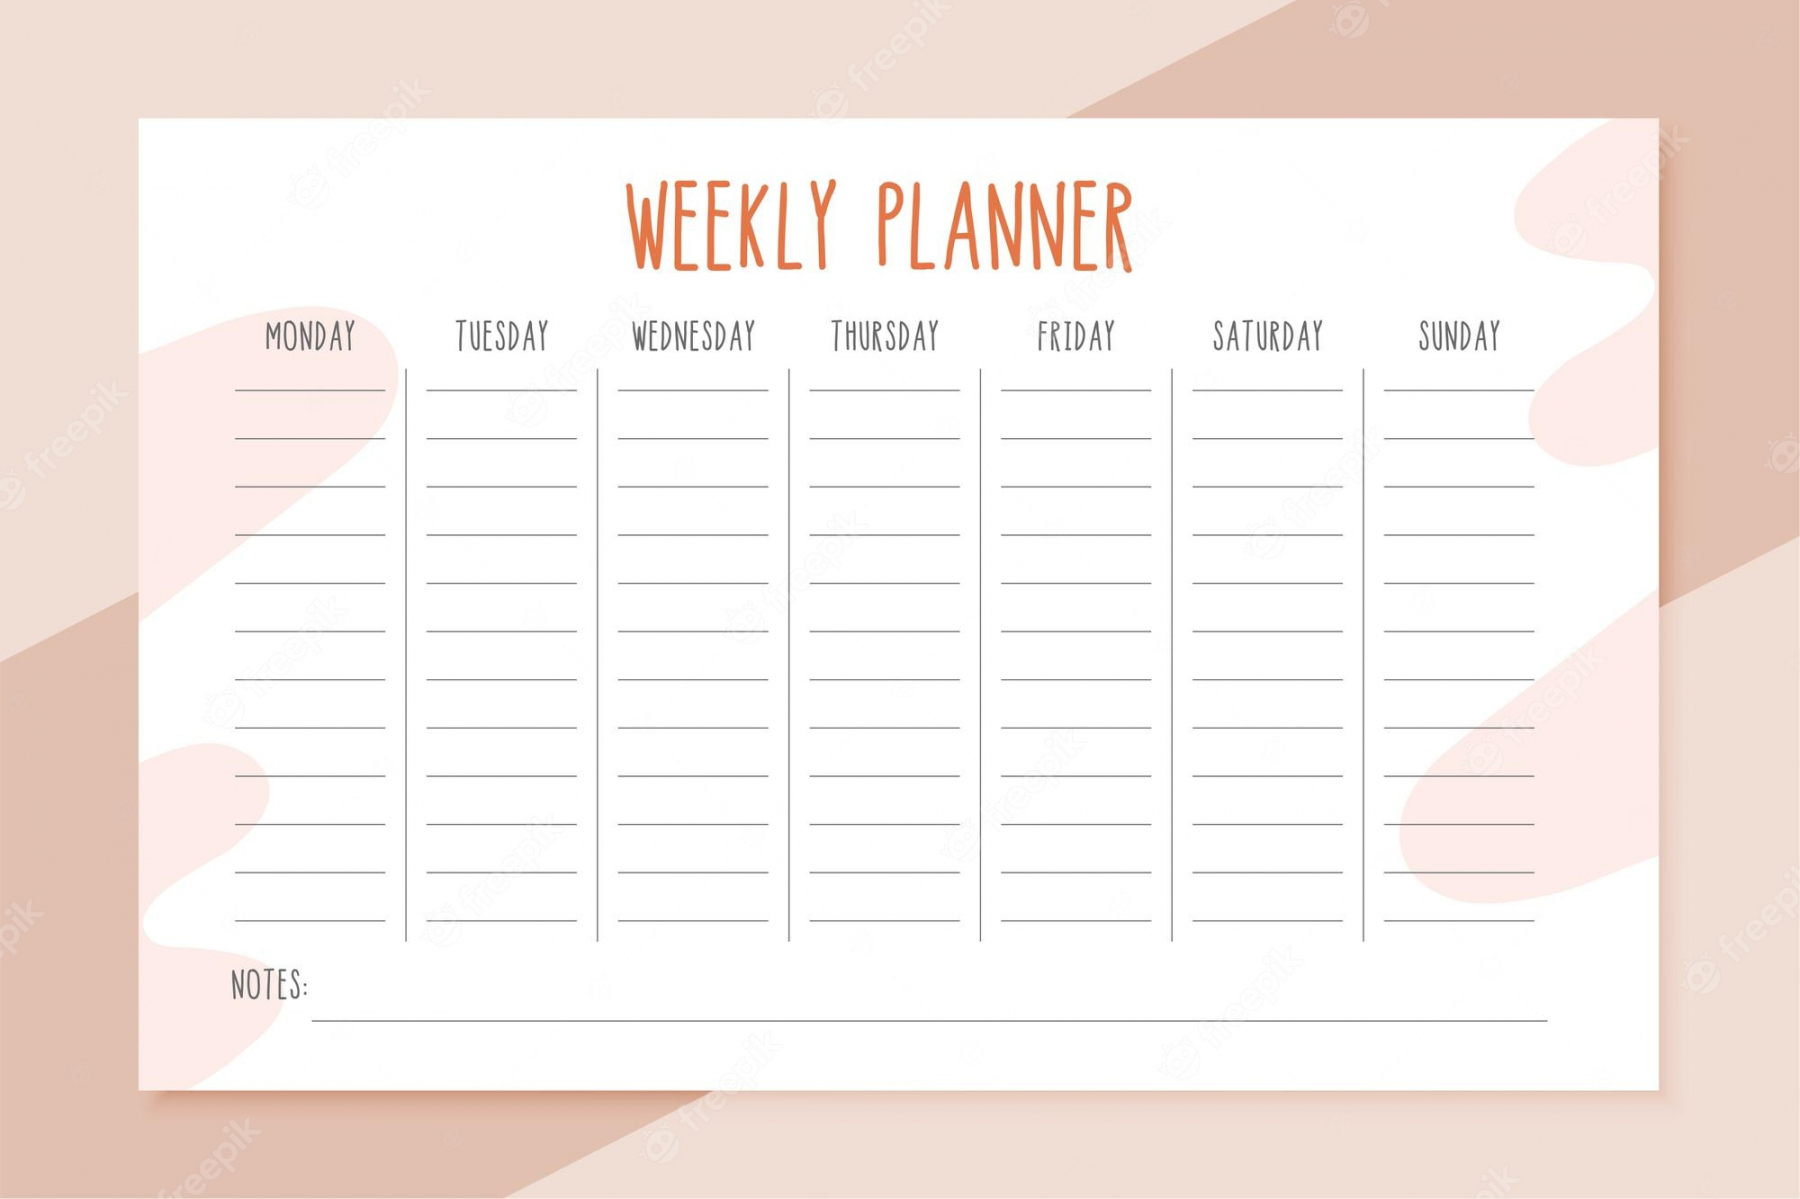 Weekly Planner Free Printable - Printable - Weekly Planner Template - Free Vectors & PSDs to Download